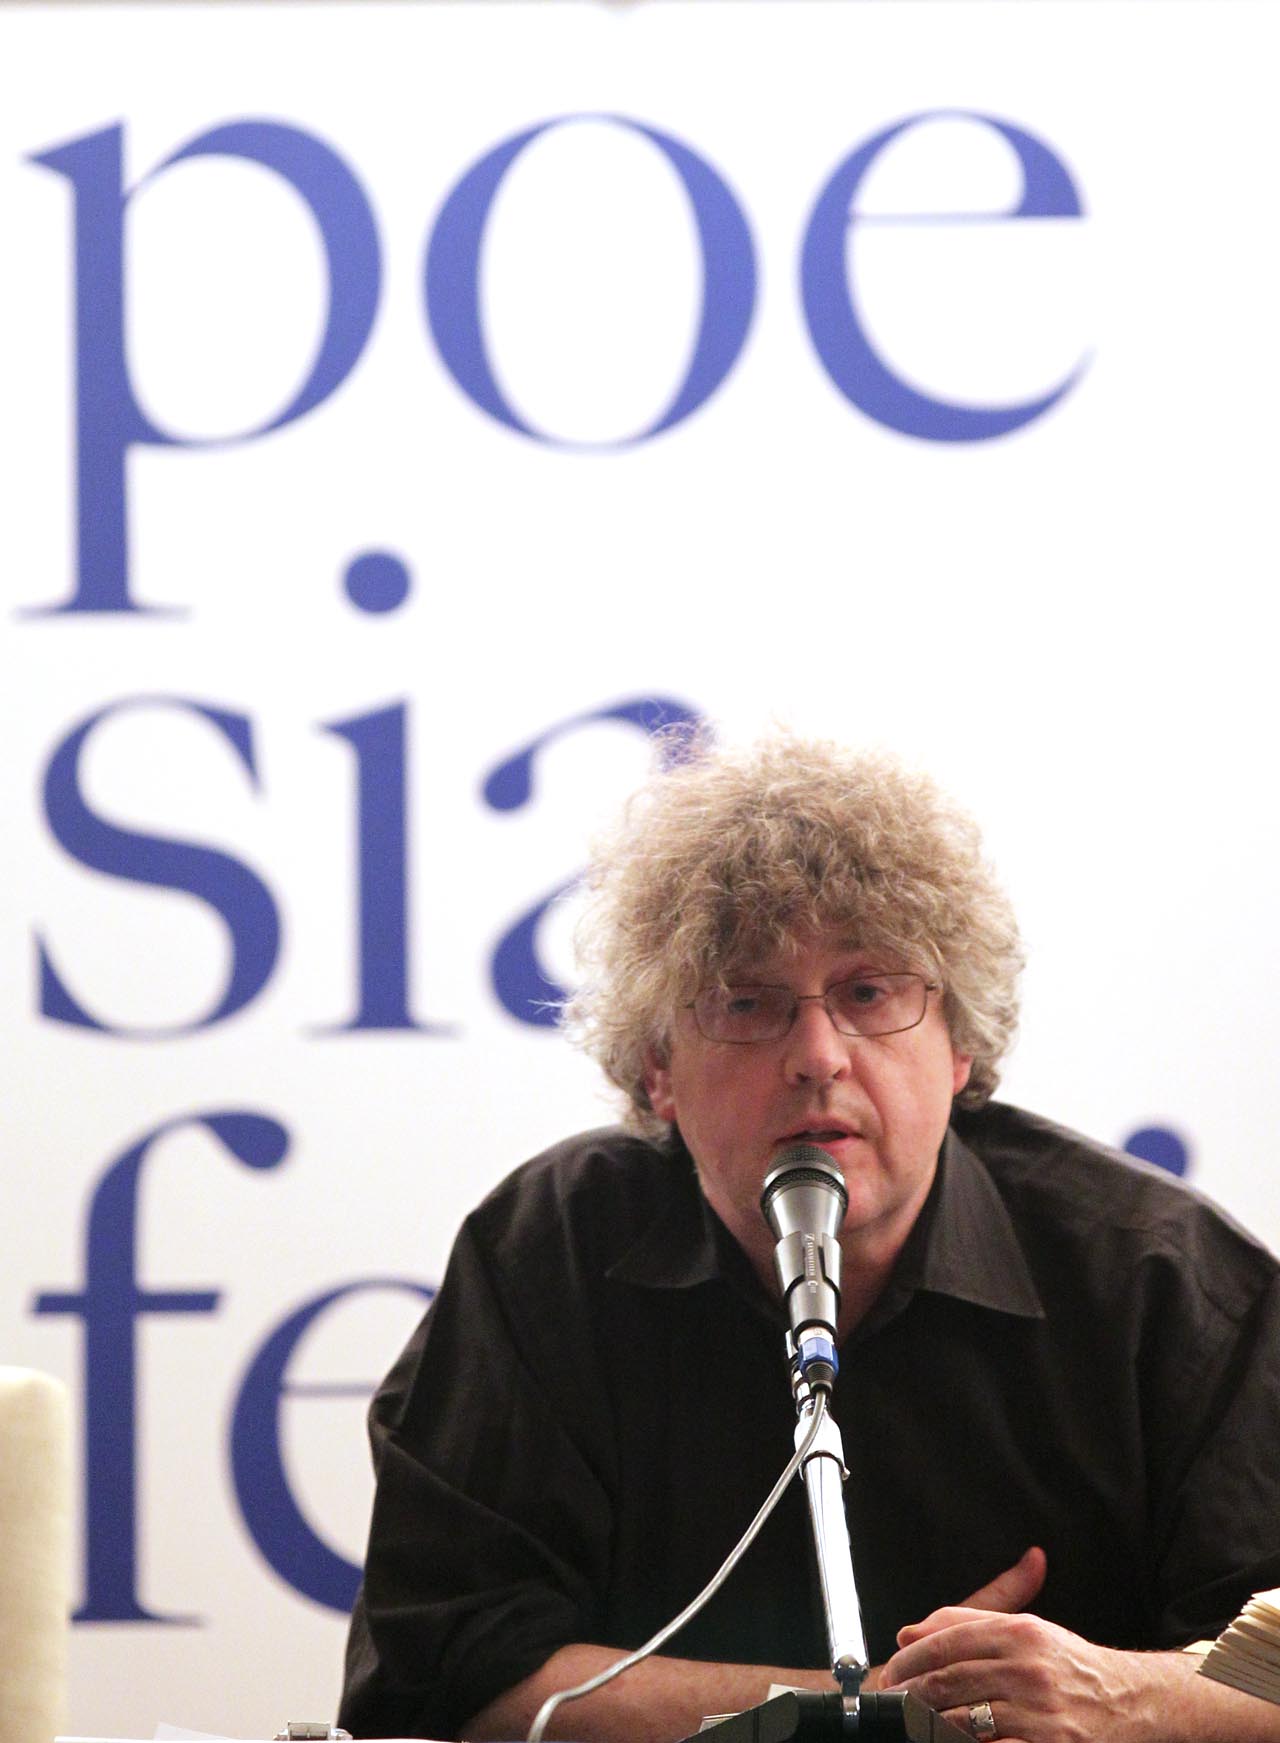 24 settembre 2011 :: Vignola, Sala dei Contrari. Paul Muldoon legge a Poesia Festival ’11